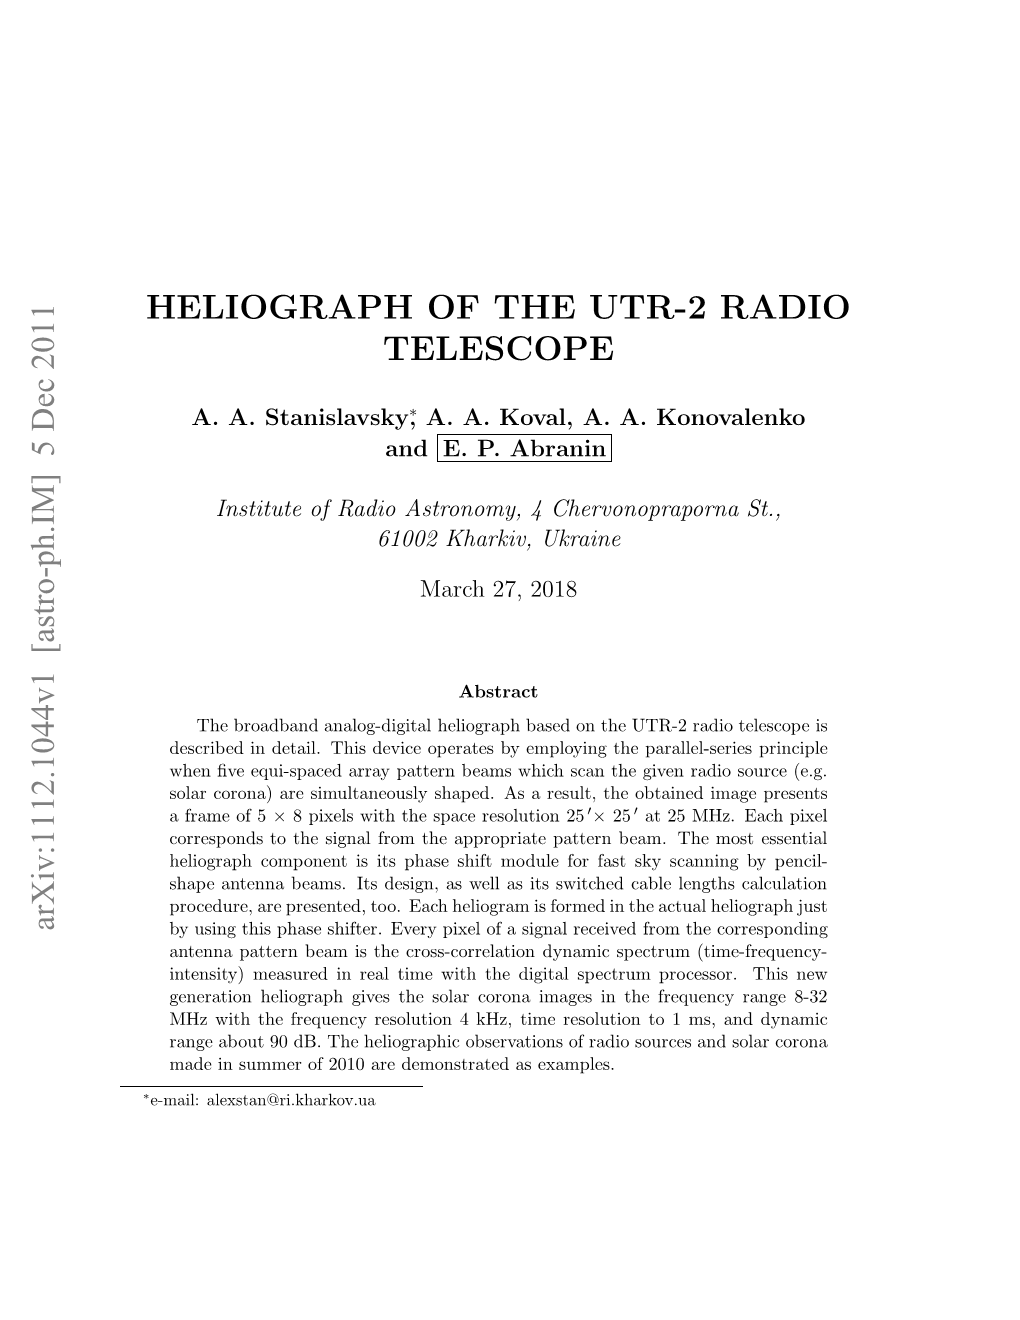 Heliograph of the UTR-2 Radio Telescope